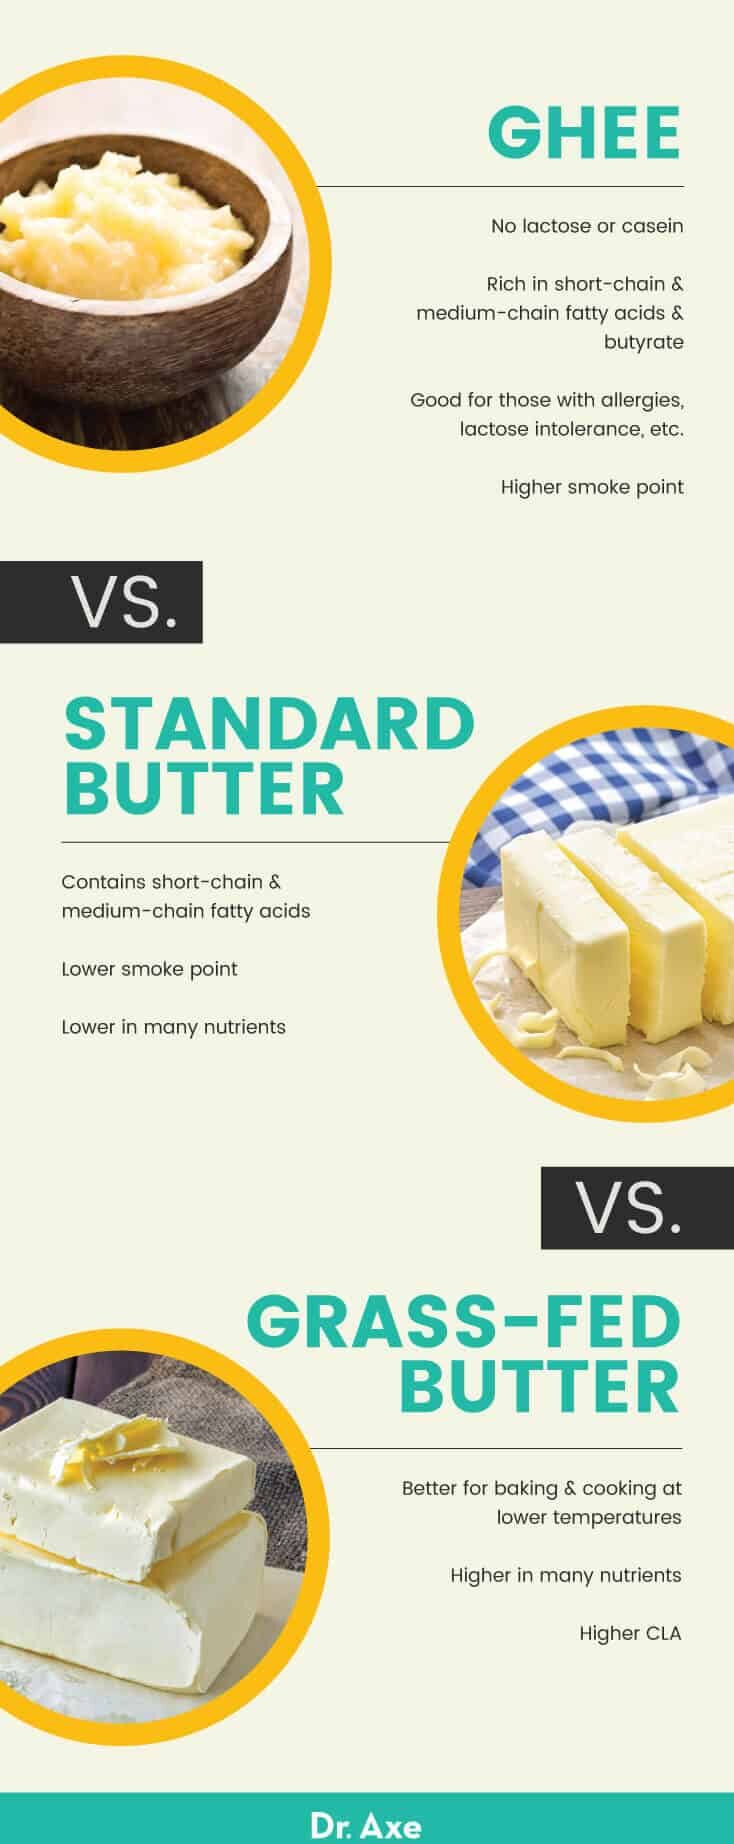 Grass-fed butter vs. ghee vs. standard butter - Dr. Axe